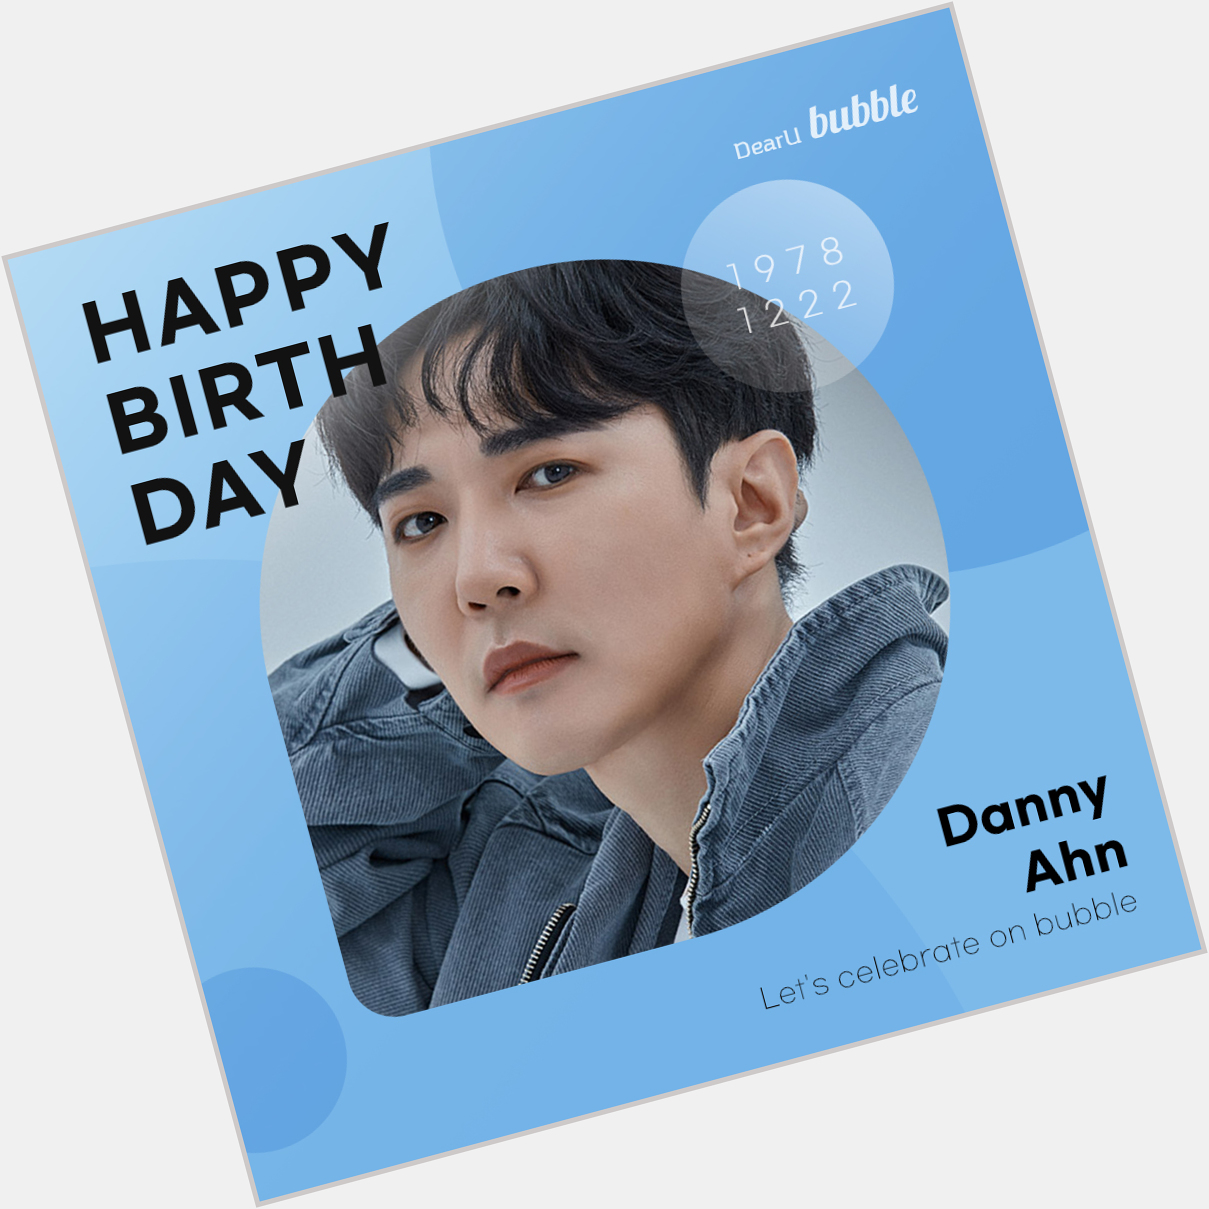  Happy Birthday Danny Ahn       